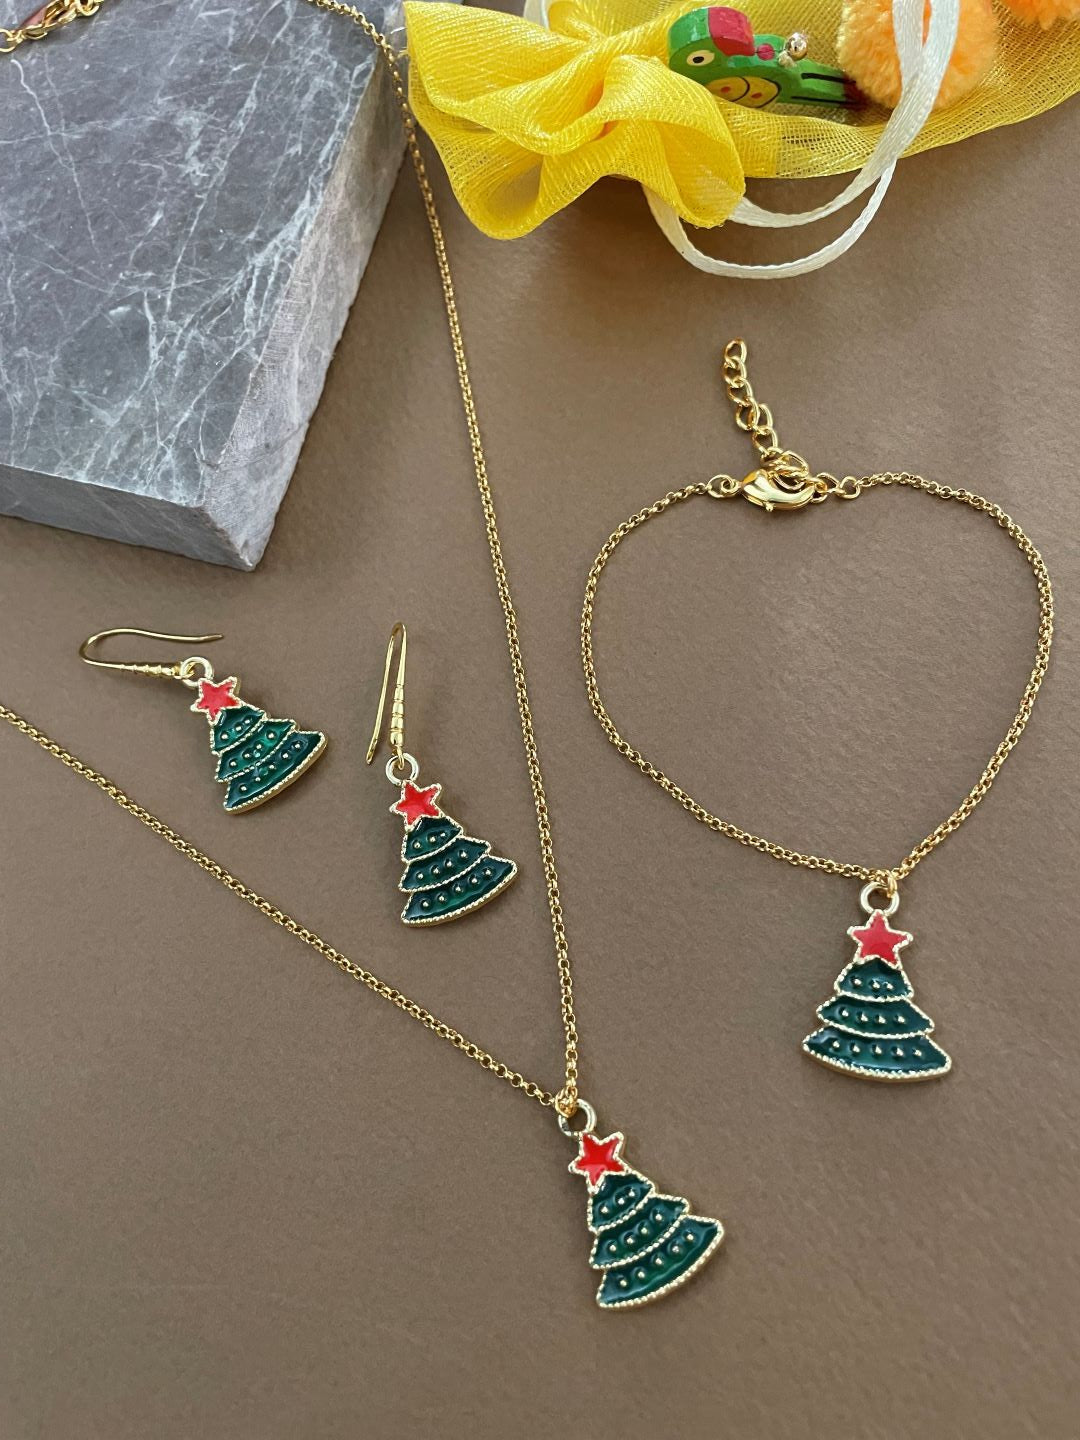 Christmas Tree Pendant Necklace Earring and Bracelet Set